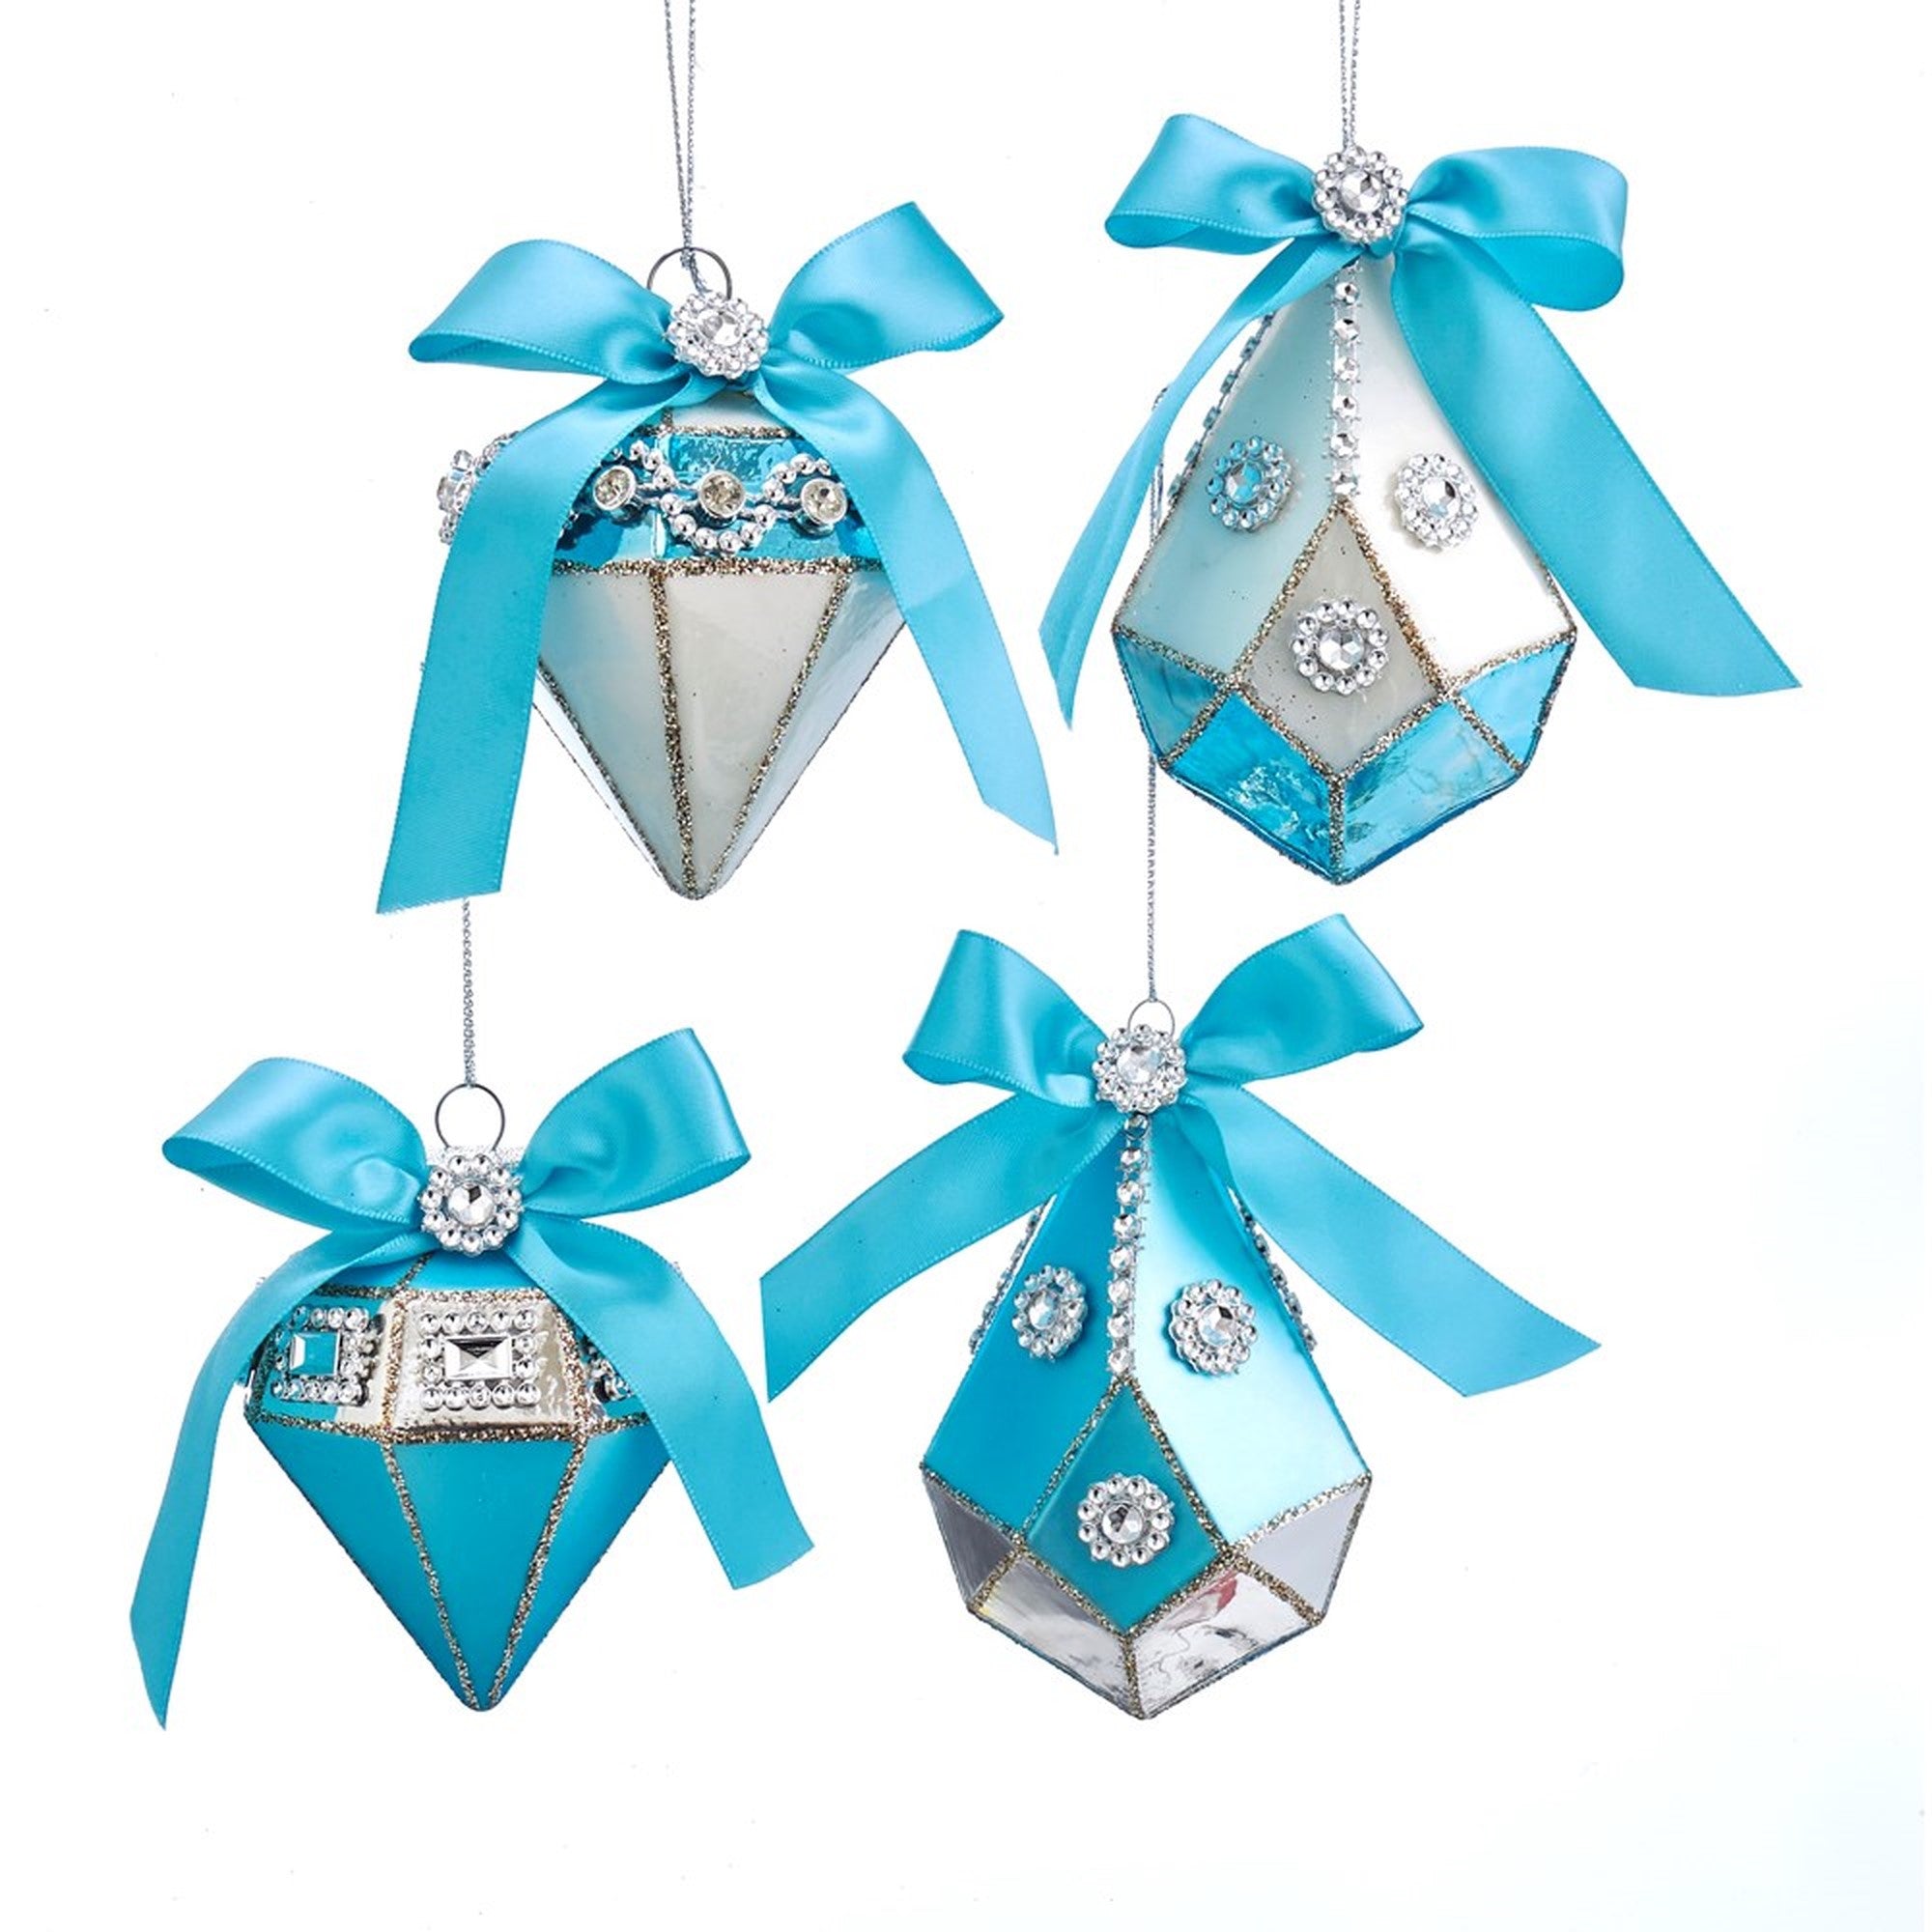 Kurt Adler Tiffany Blue Drop Ornaments with Bow | Putti Christmas 